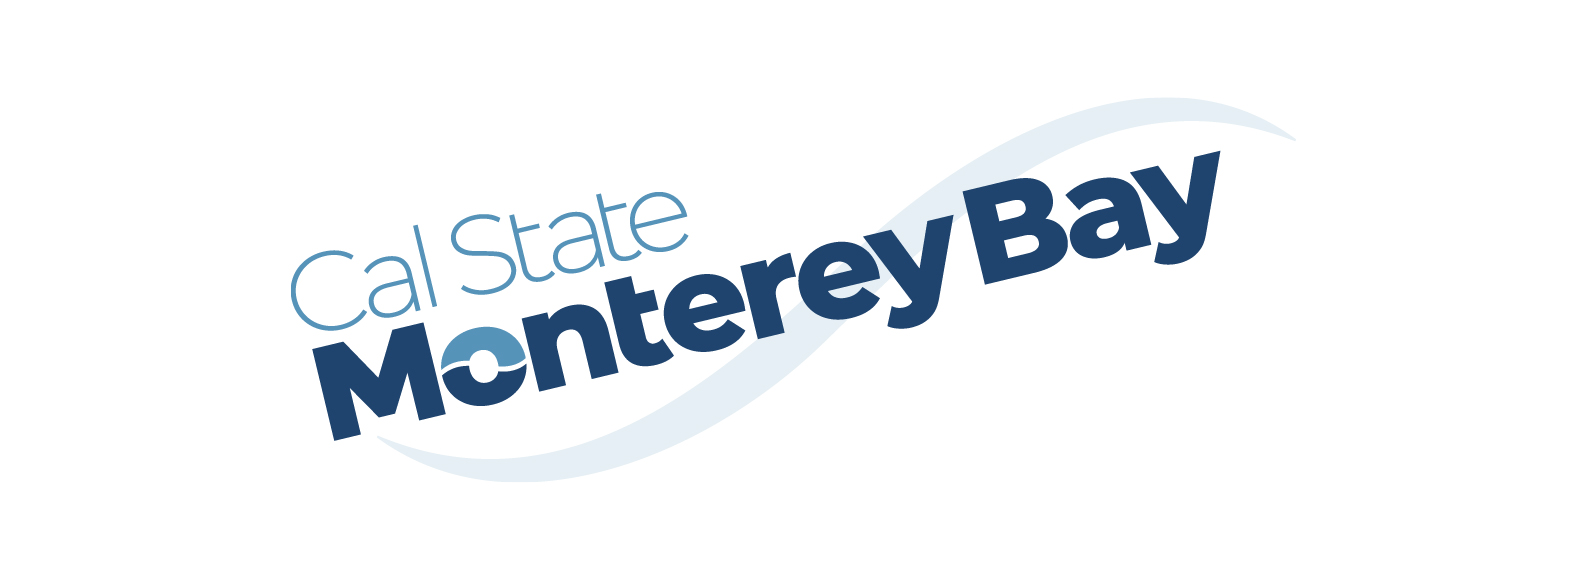 Cal State Monterey Bay Logo rotated